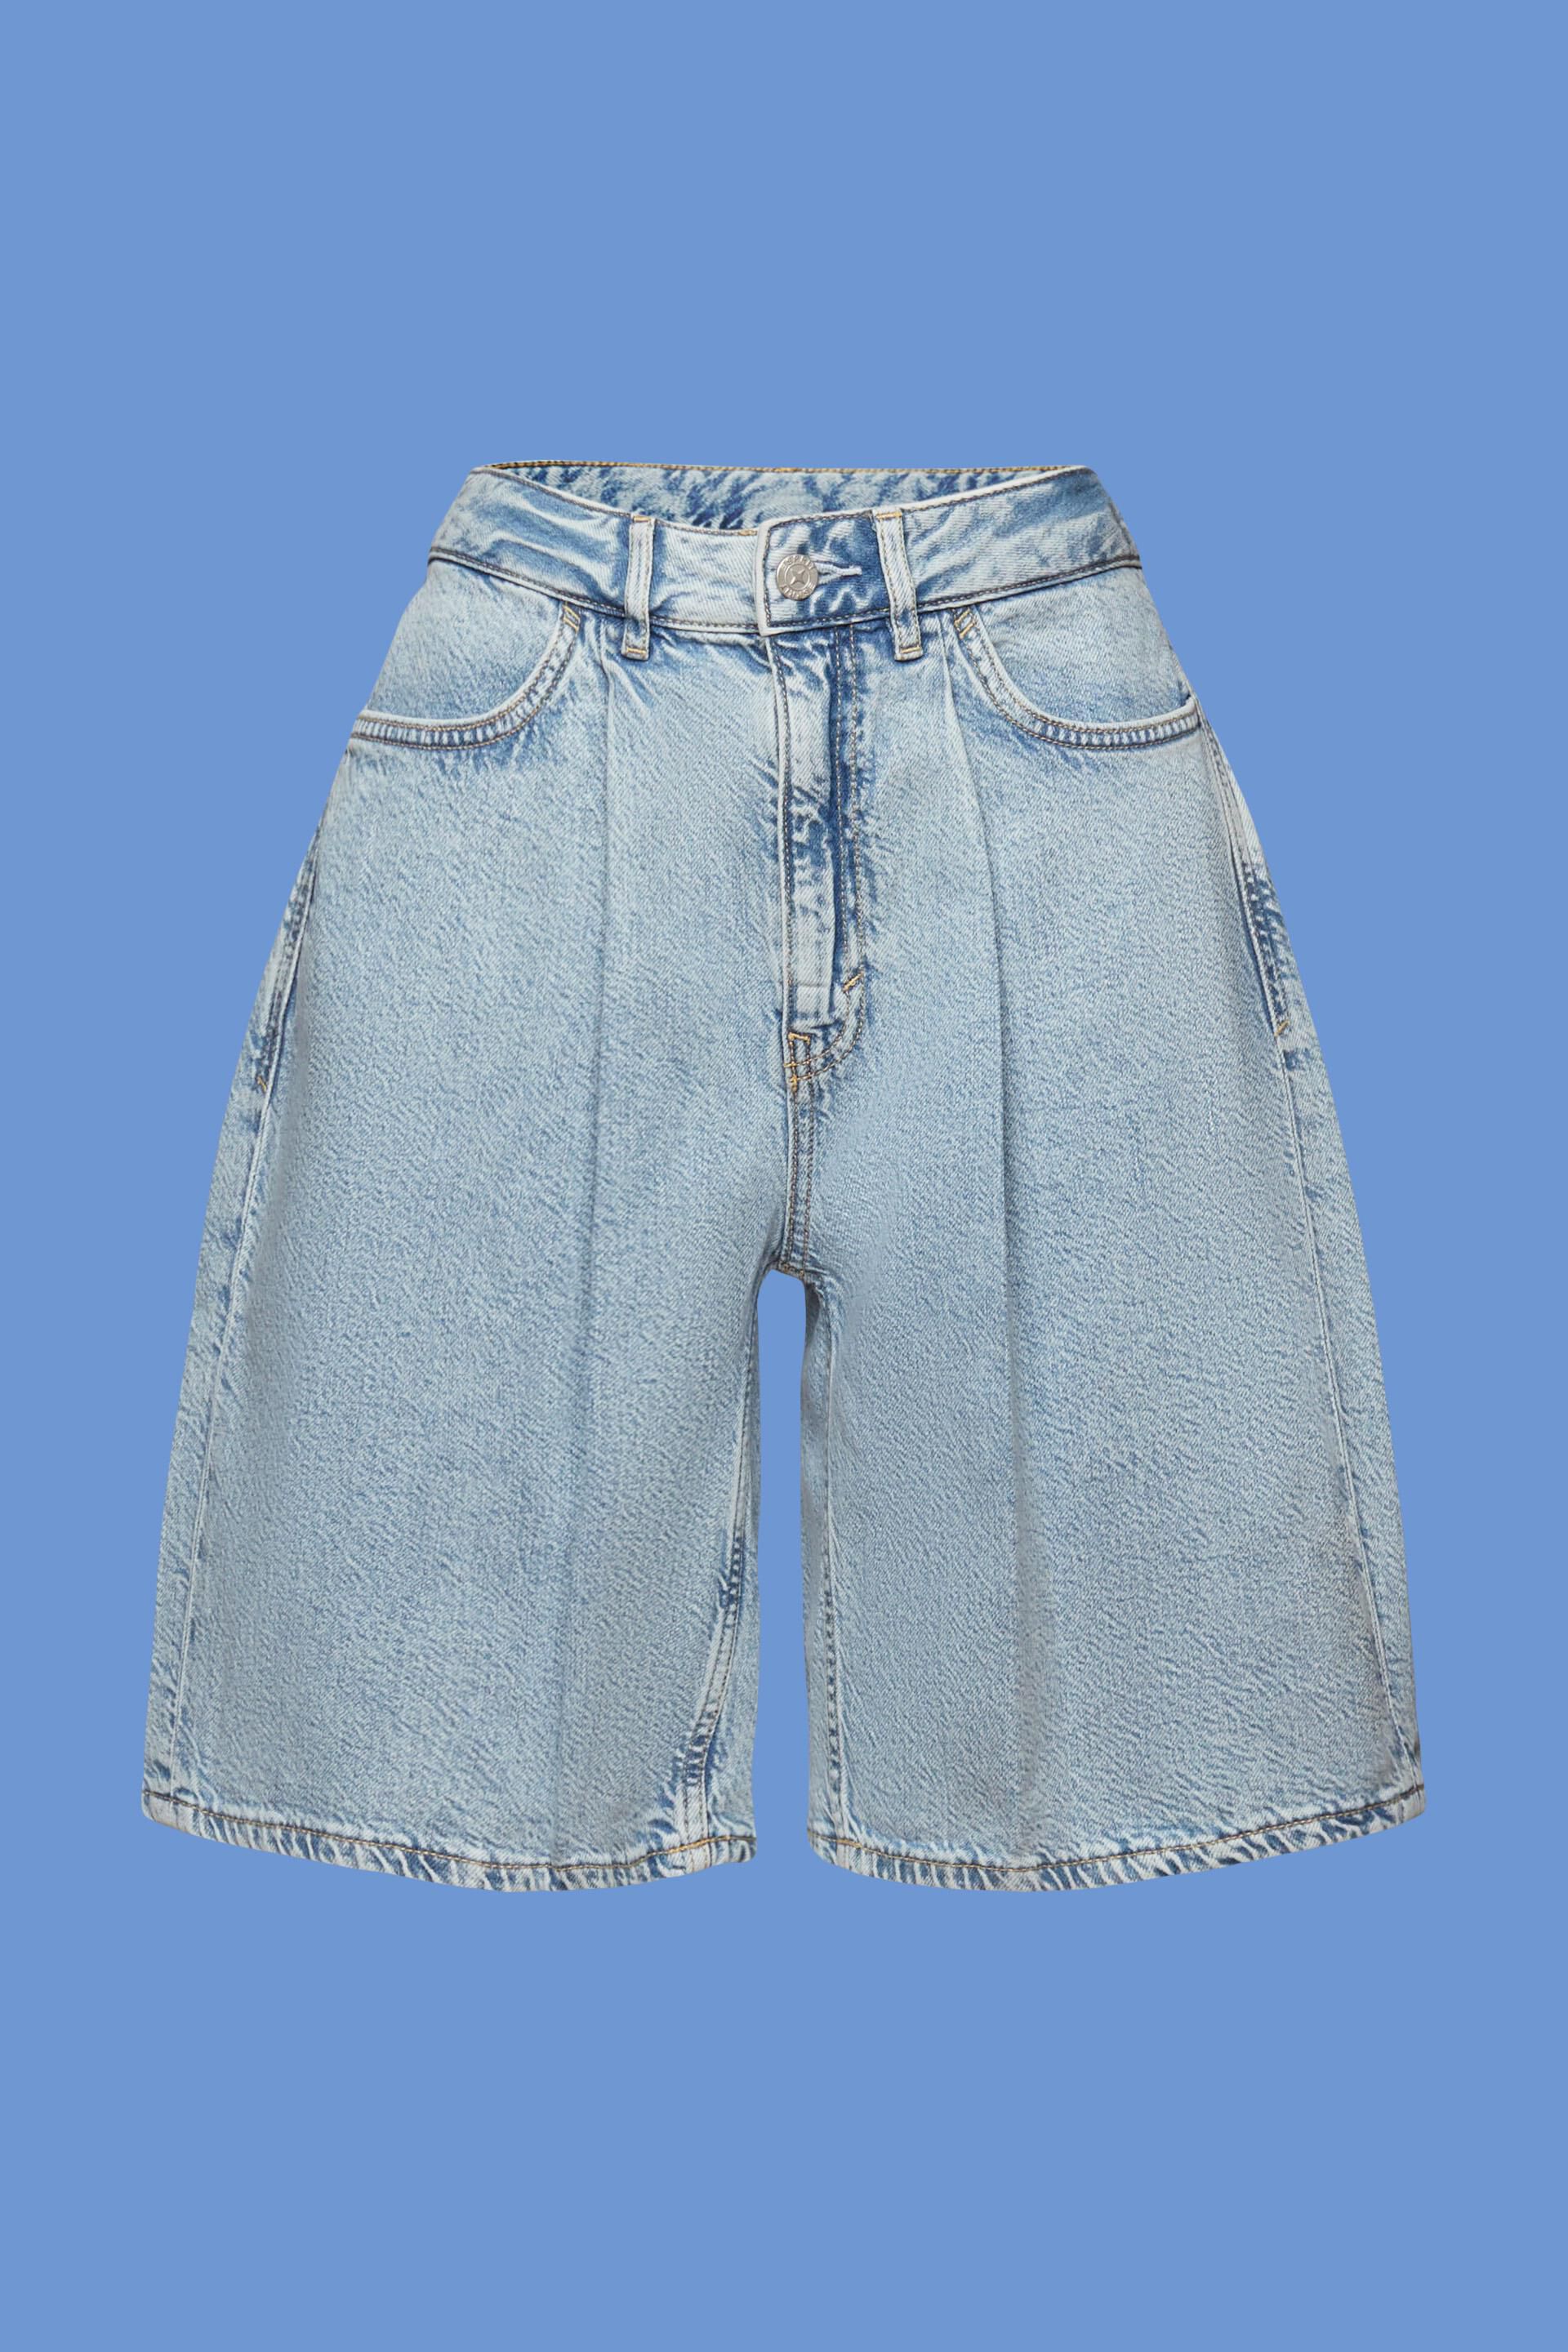 CHGBMOK Denim Shorts Women Jeans Fashion High-Waisted Straight Pocket Short  Pants Summer Clearance - Walmart.com